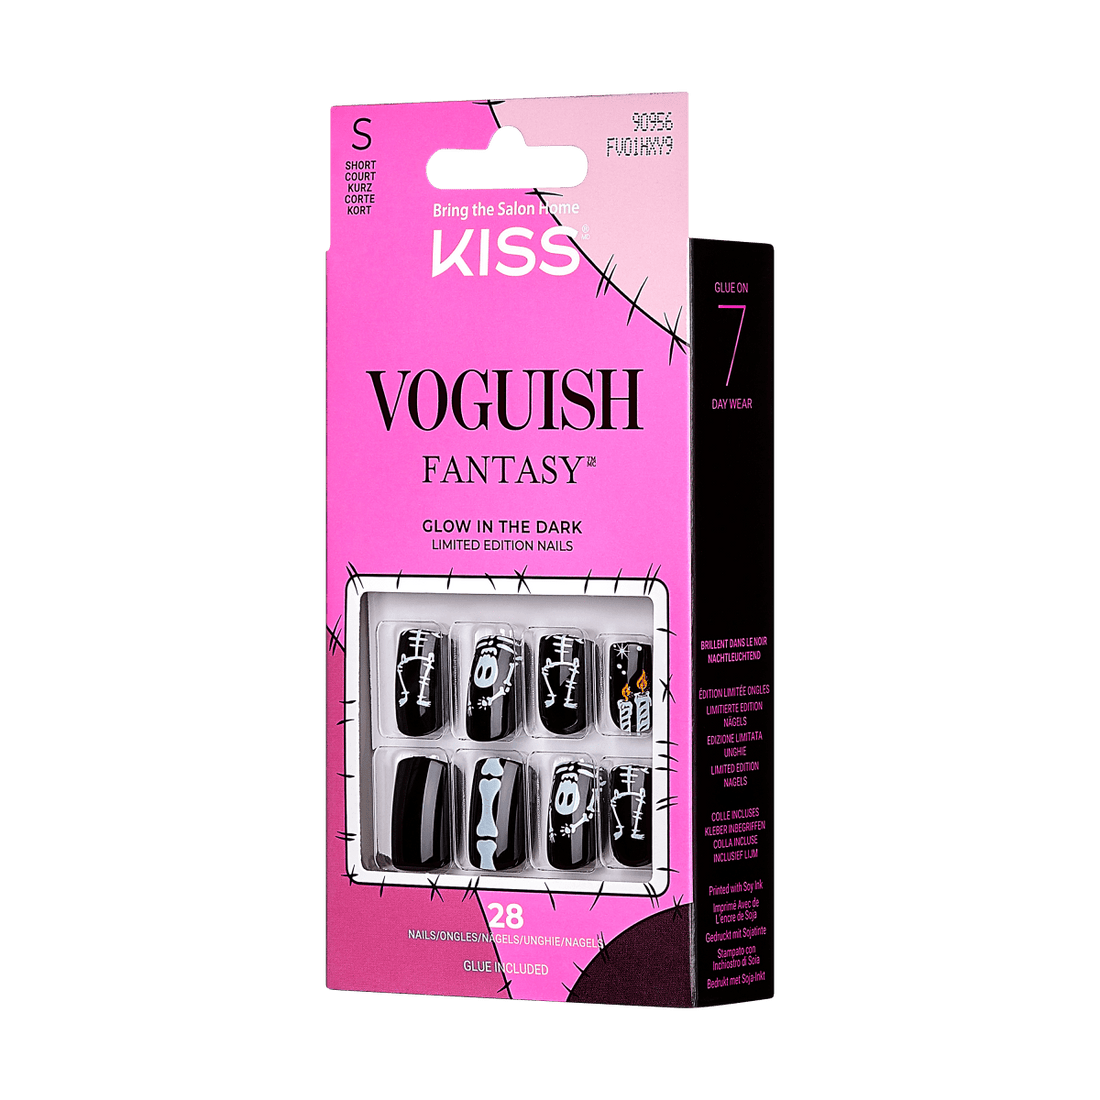 KISS Voguish Fantasy Halloween Nails - The thing